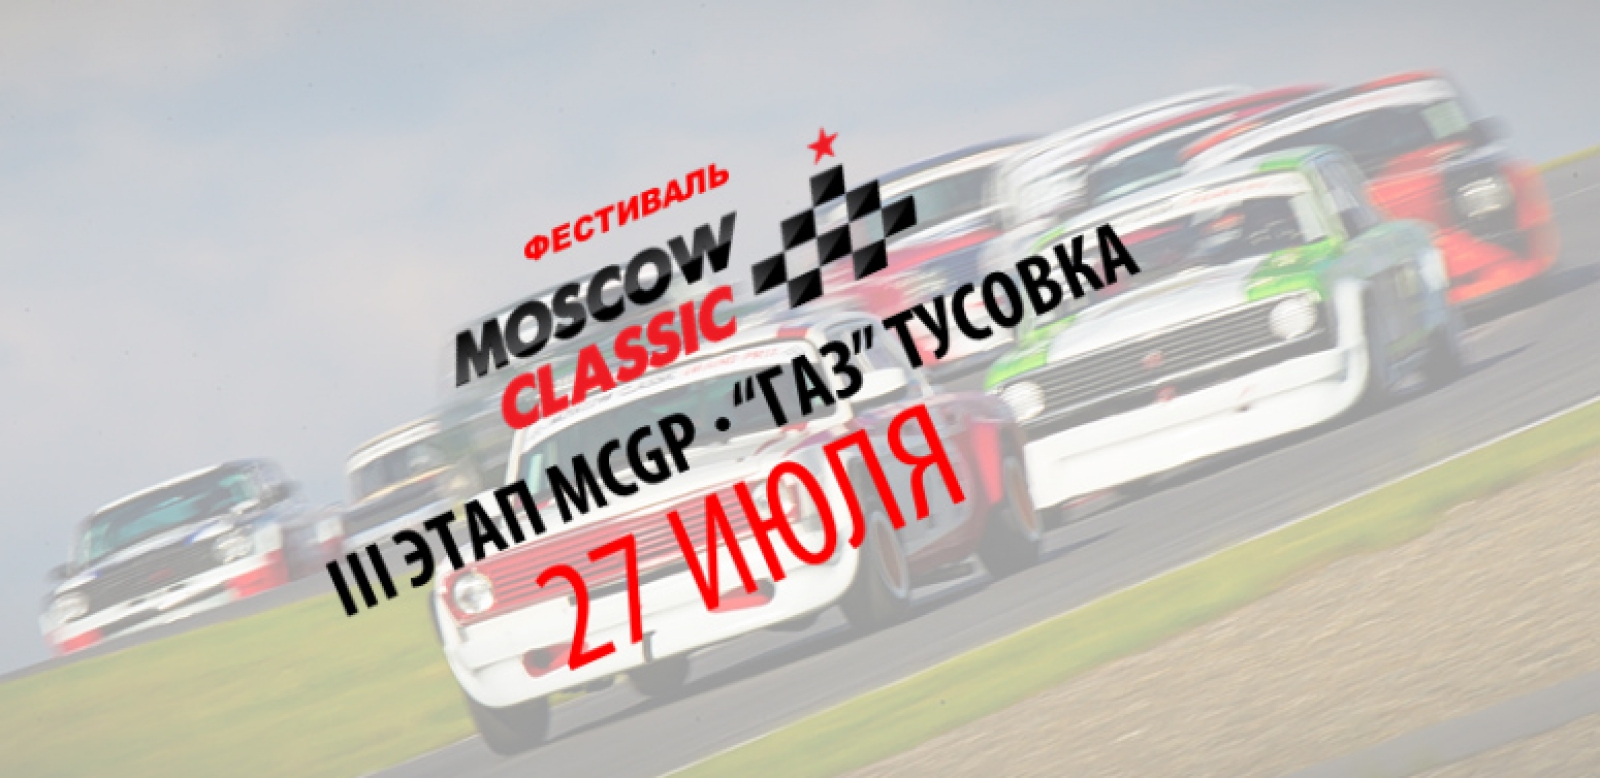 Moscow Classic Grand Prix, 3 этап